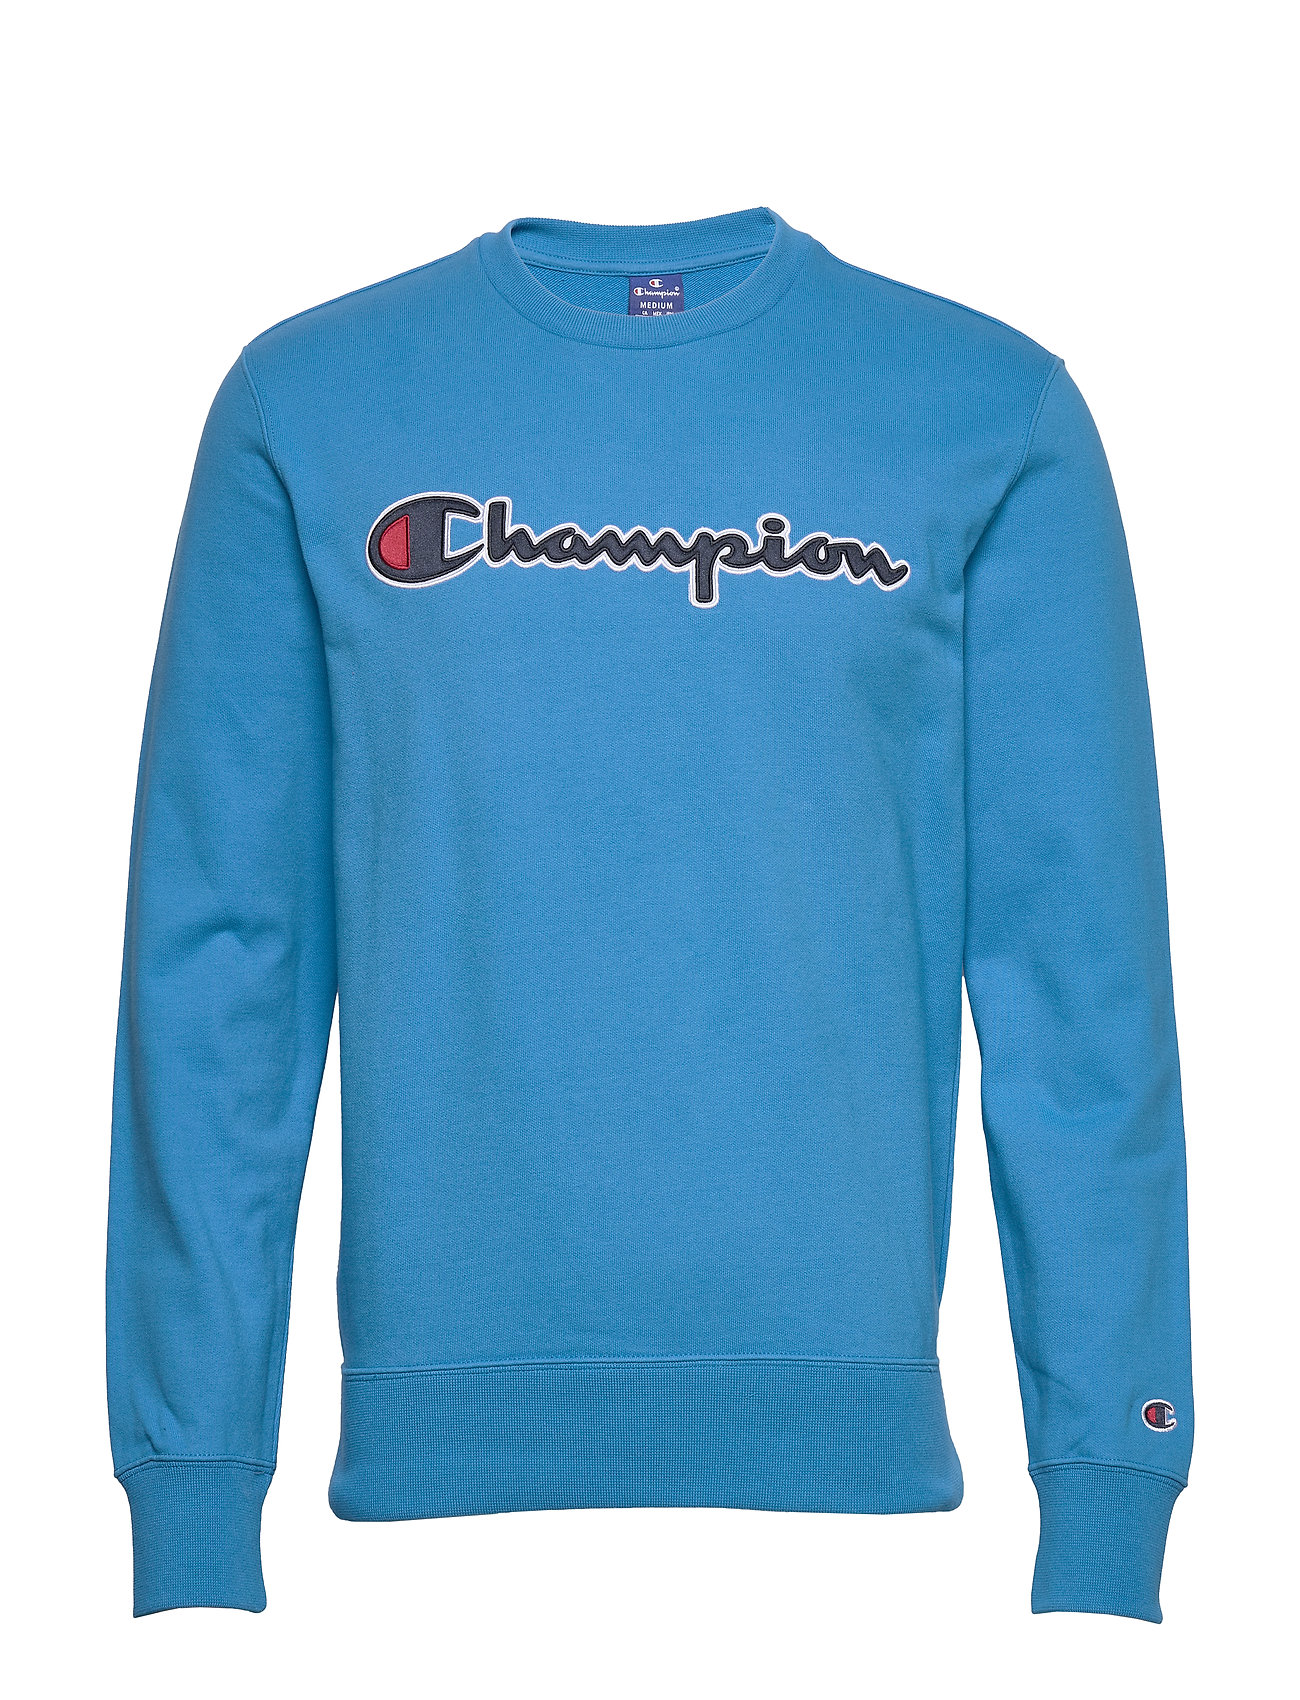 Sort Champion Sweatshirt Sweatshirt Blå Champion sweatshirts for herre -